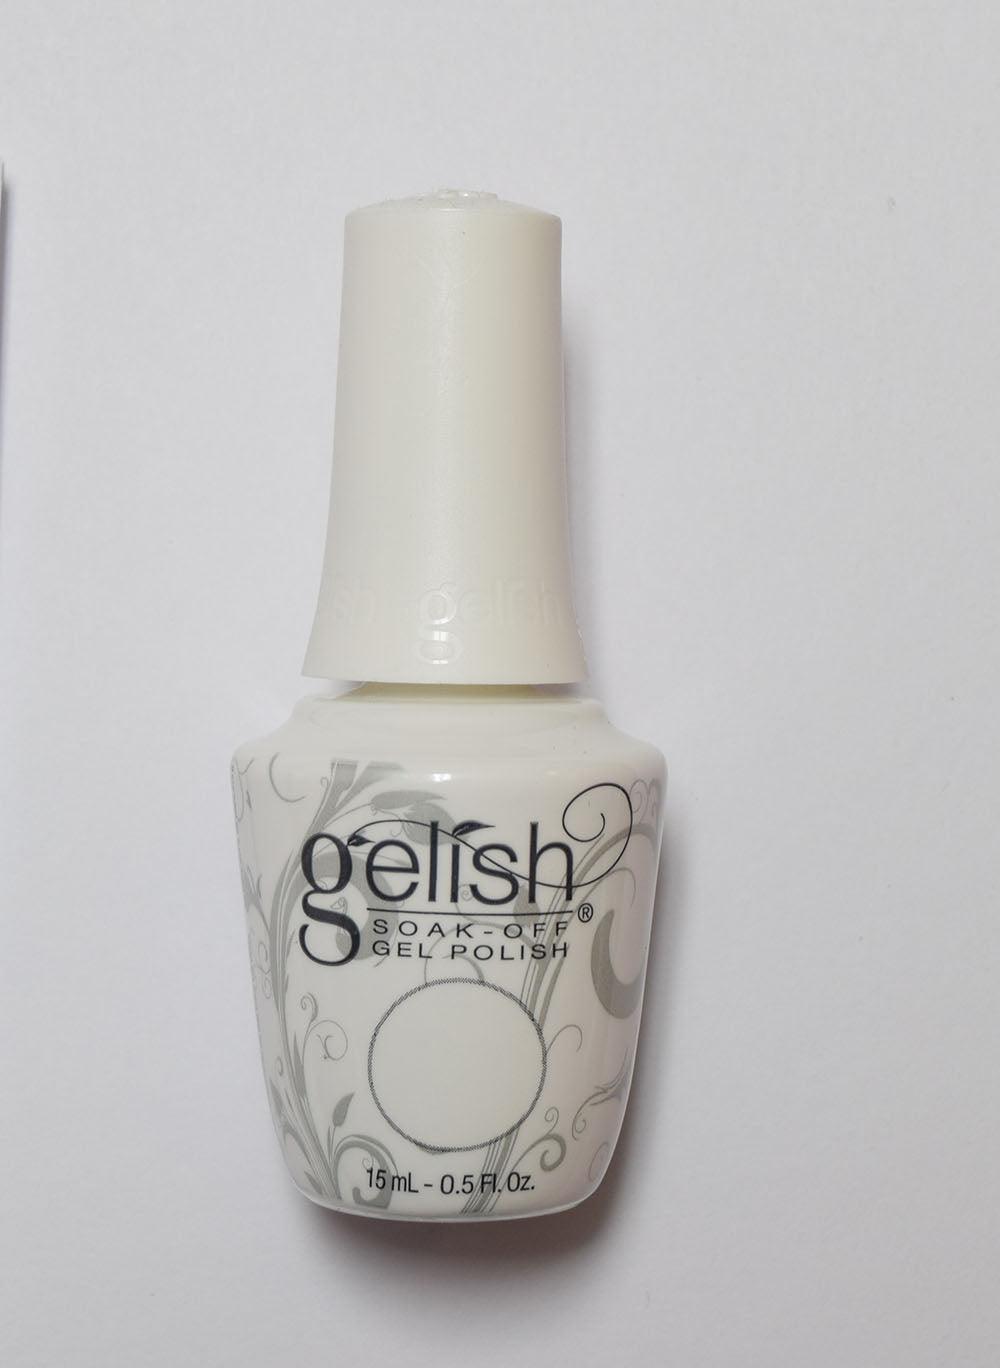 GELISH - Soak off Gel Polish 0.5 oz - #1110811 Sheek White